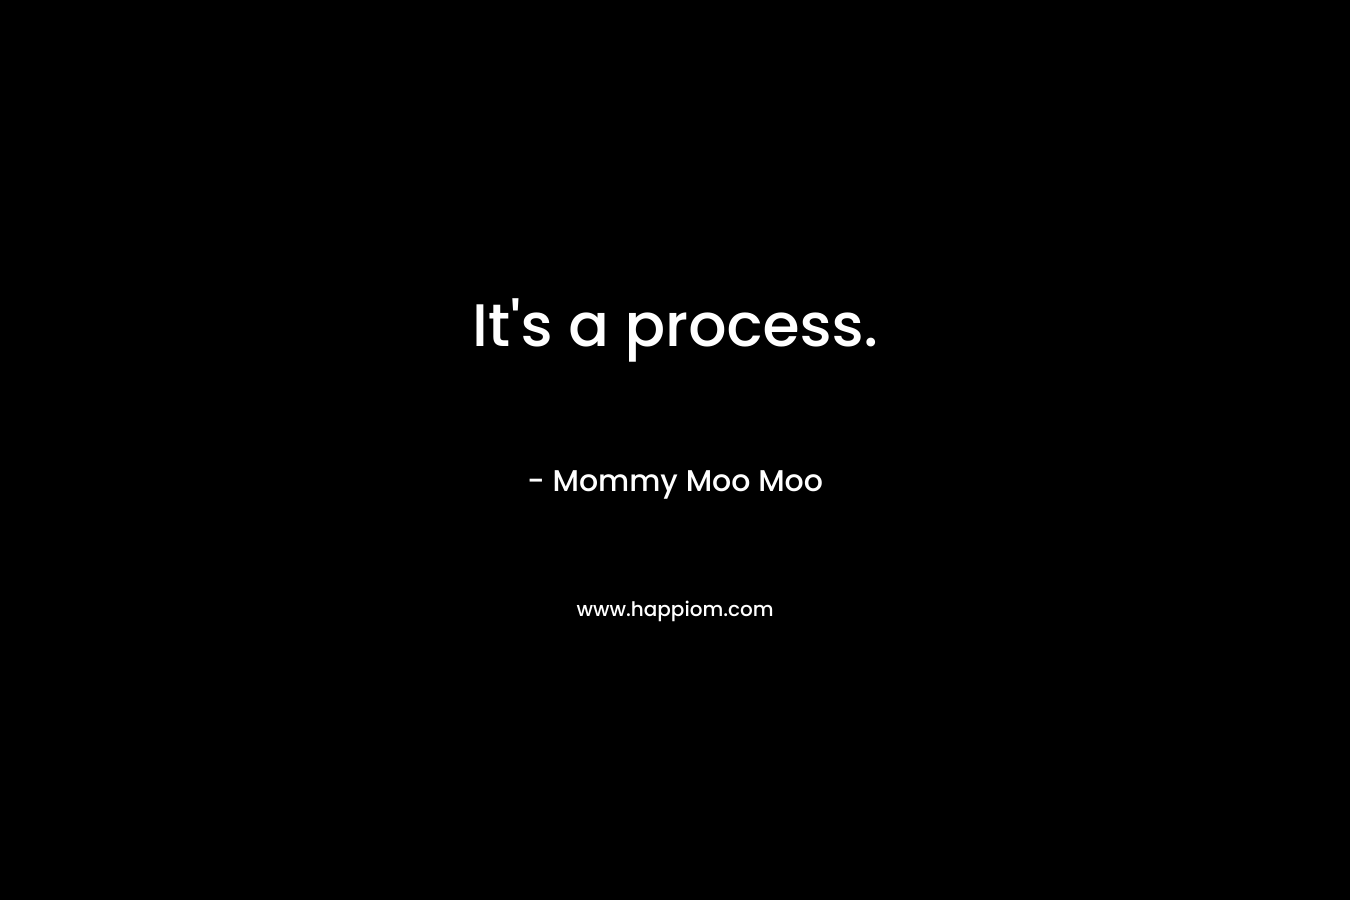 It's a process.